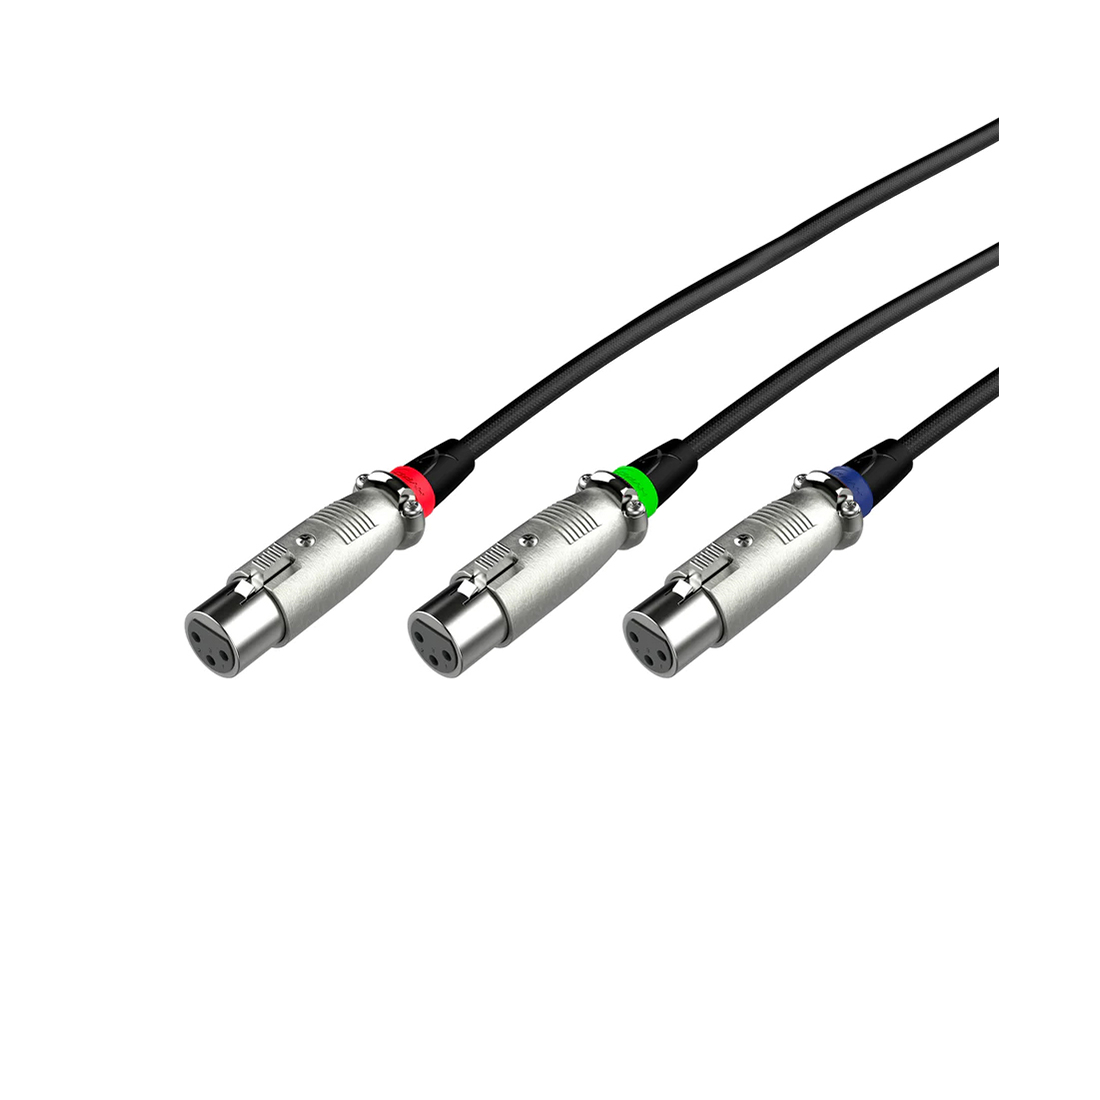 Аудиокабель HyperX для микрофона XLR Cable 6Z2B9AA